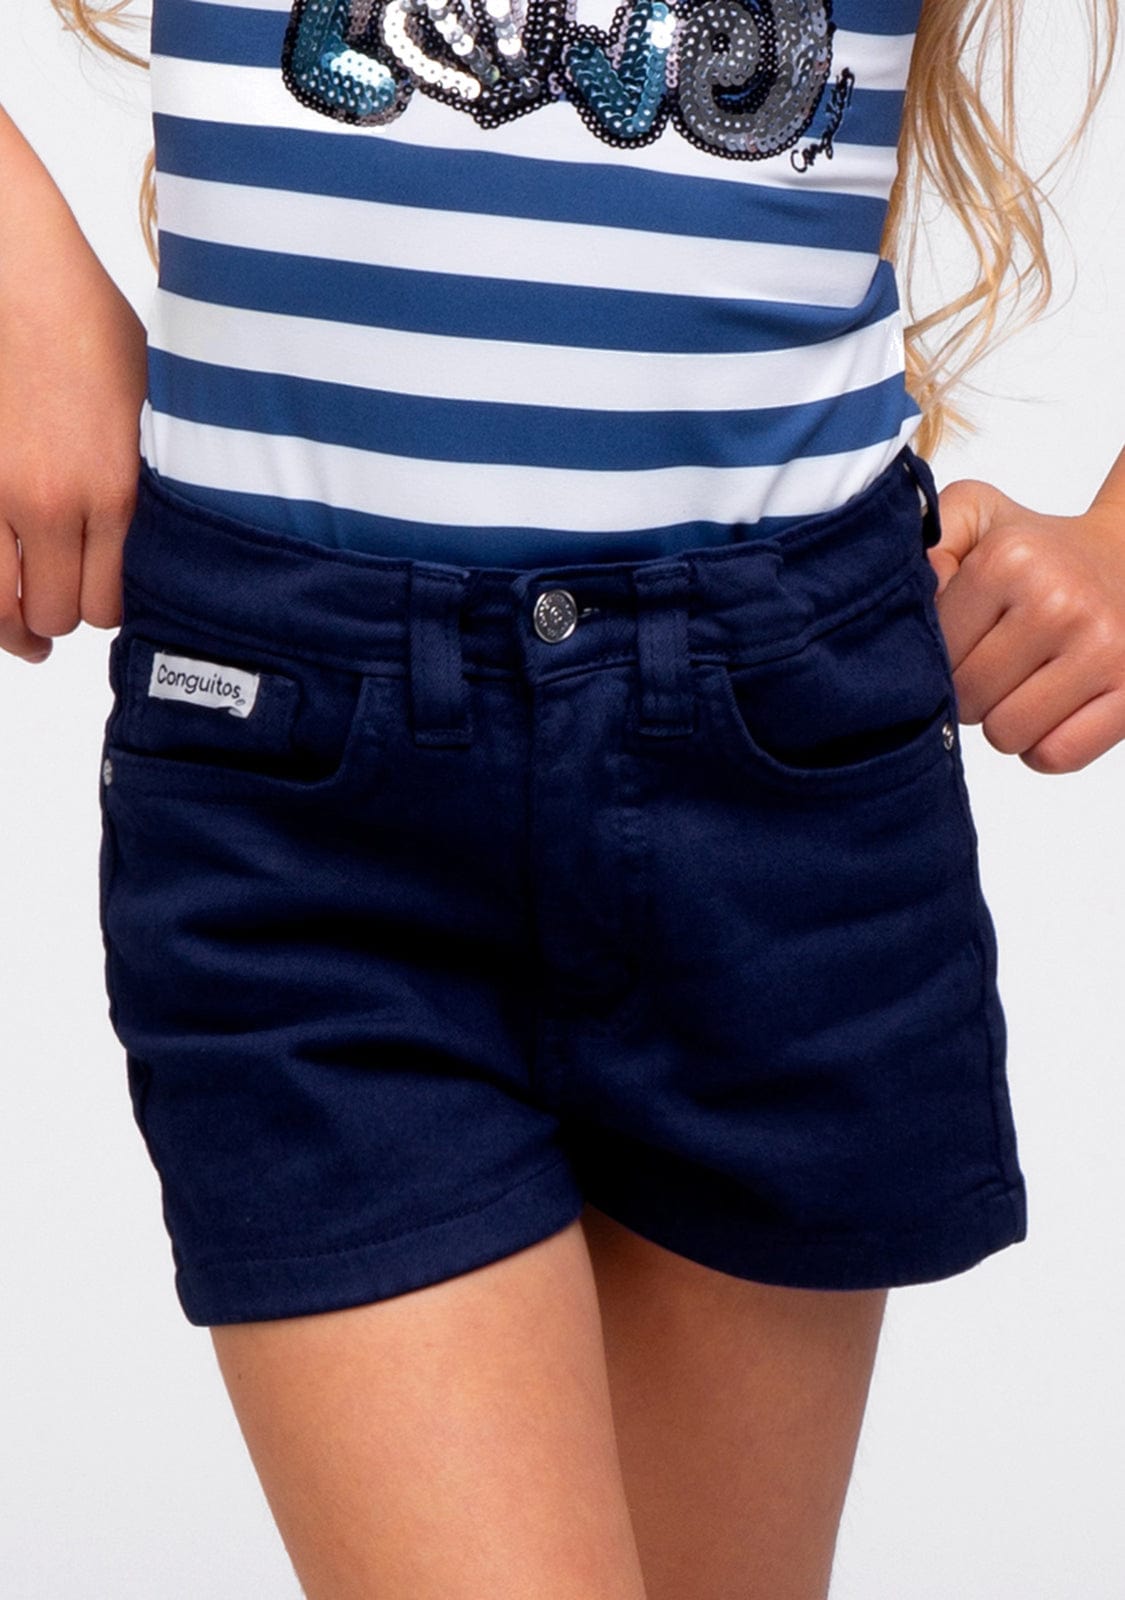 CONGUITOS TEXTIL Clothing Girl's Navy Shorts